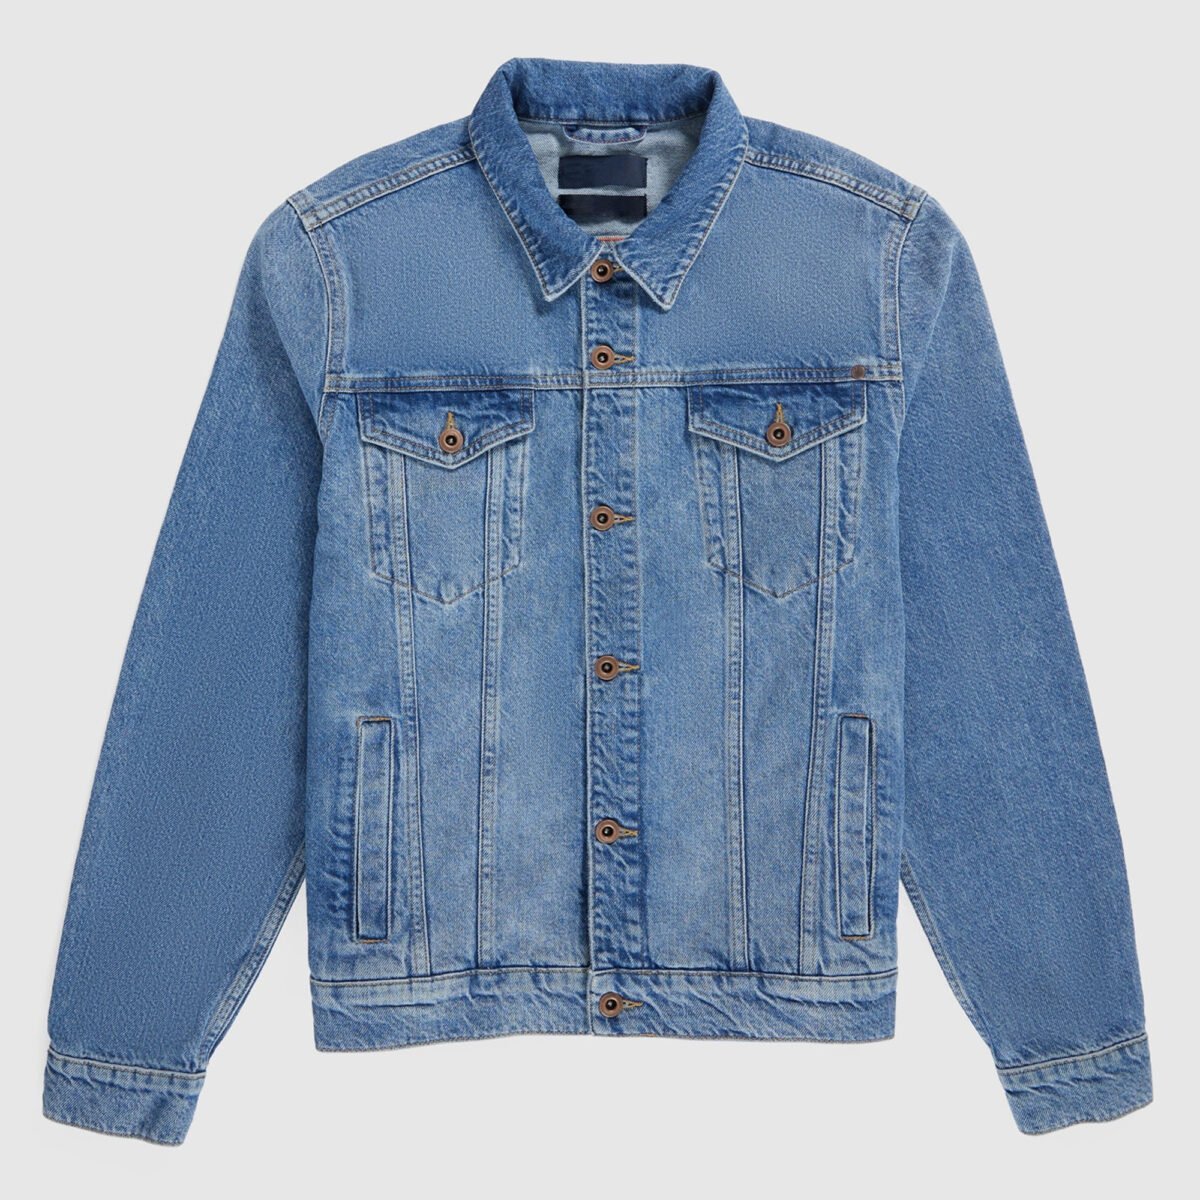 Simple design jeans jackets